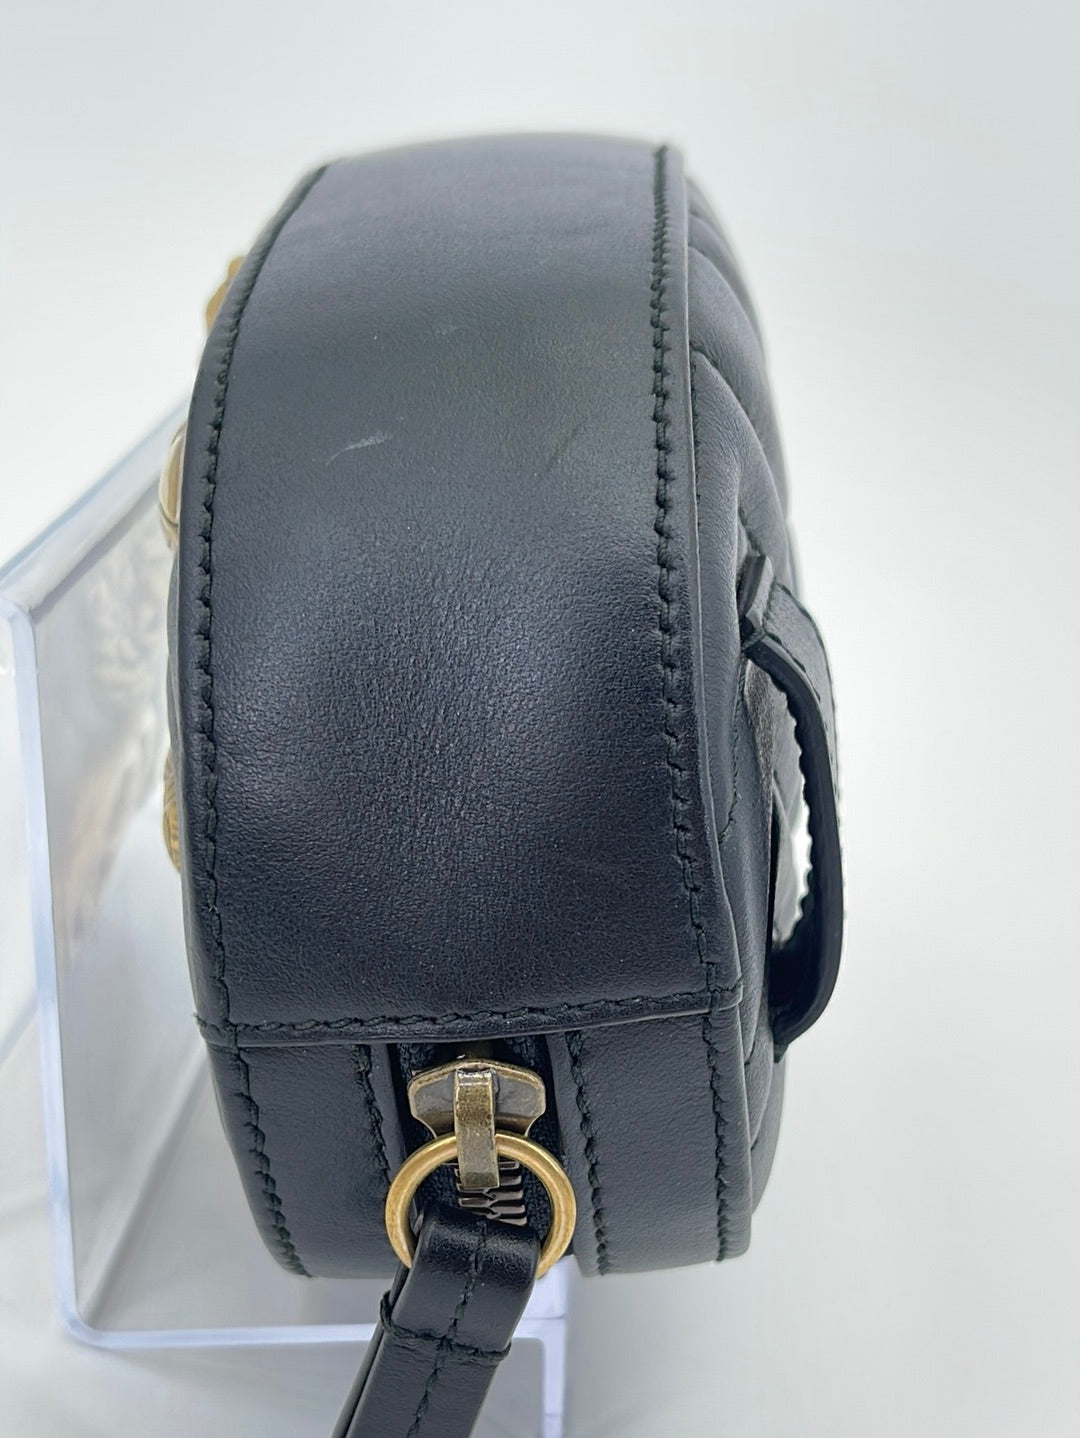 Vintage Coach White Leather No. L6C 9991 Lunch Box Crossbody Bag